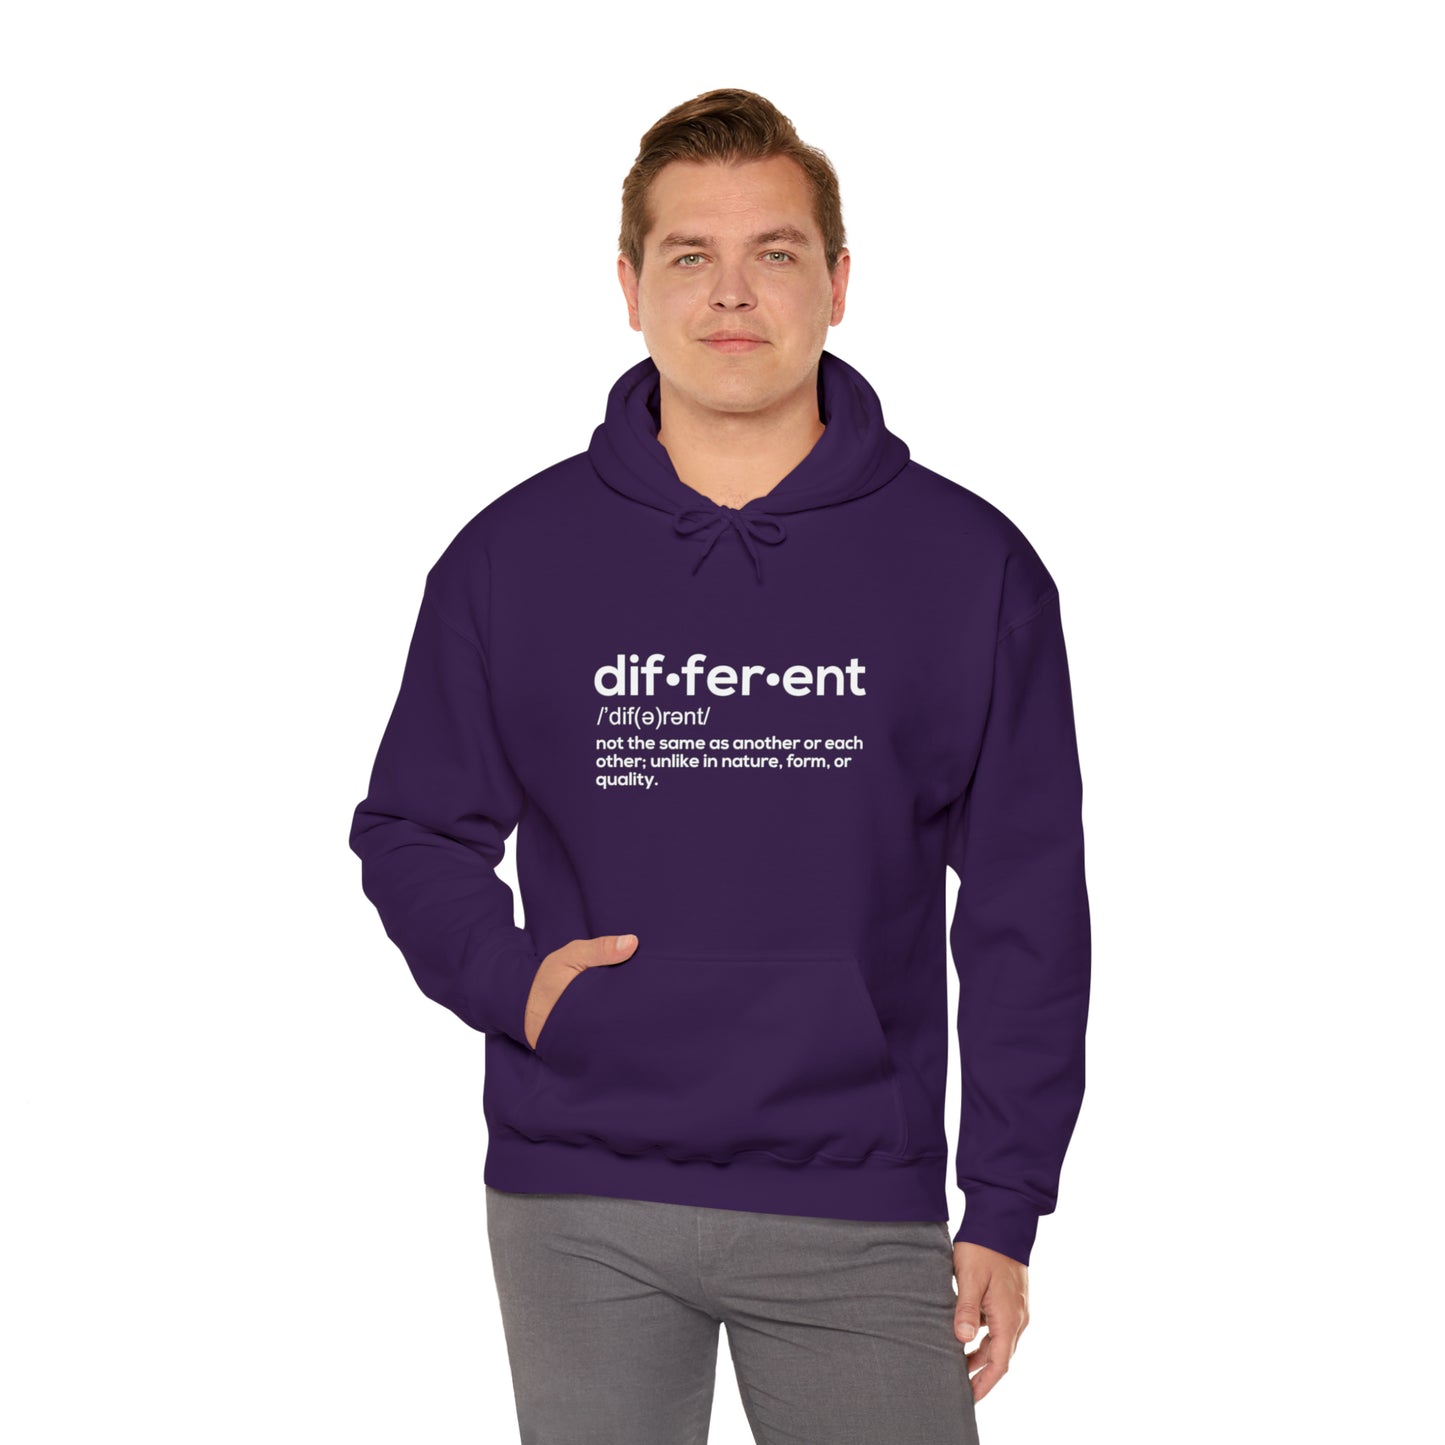 Different Definition Hooded Sweatshirt